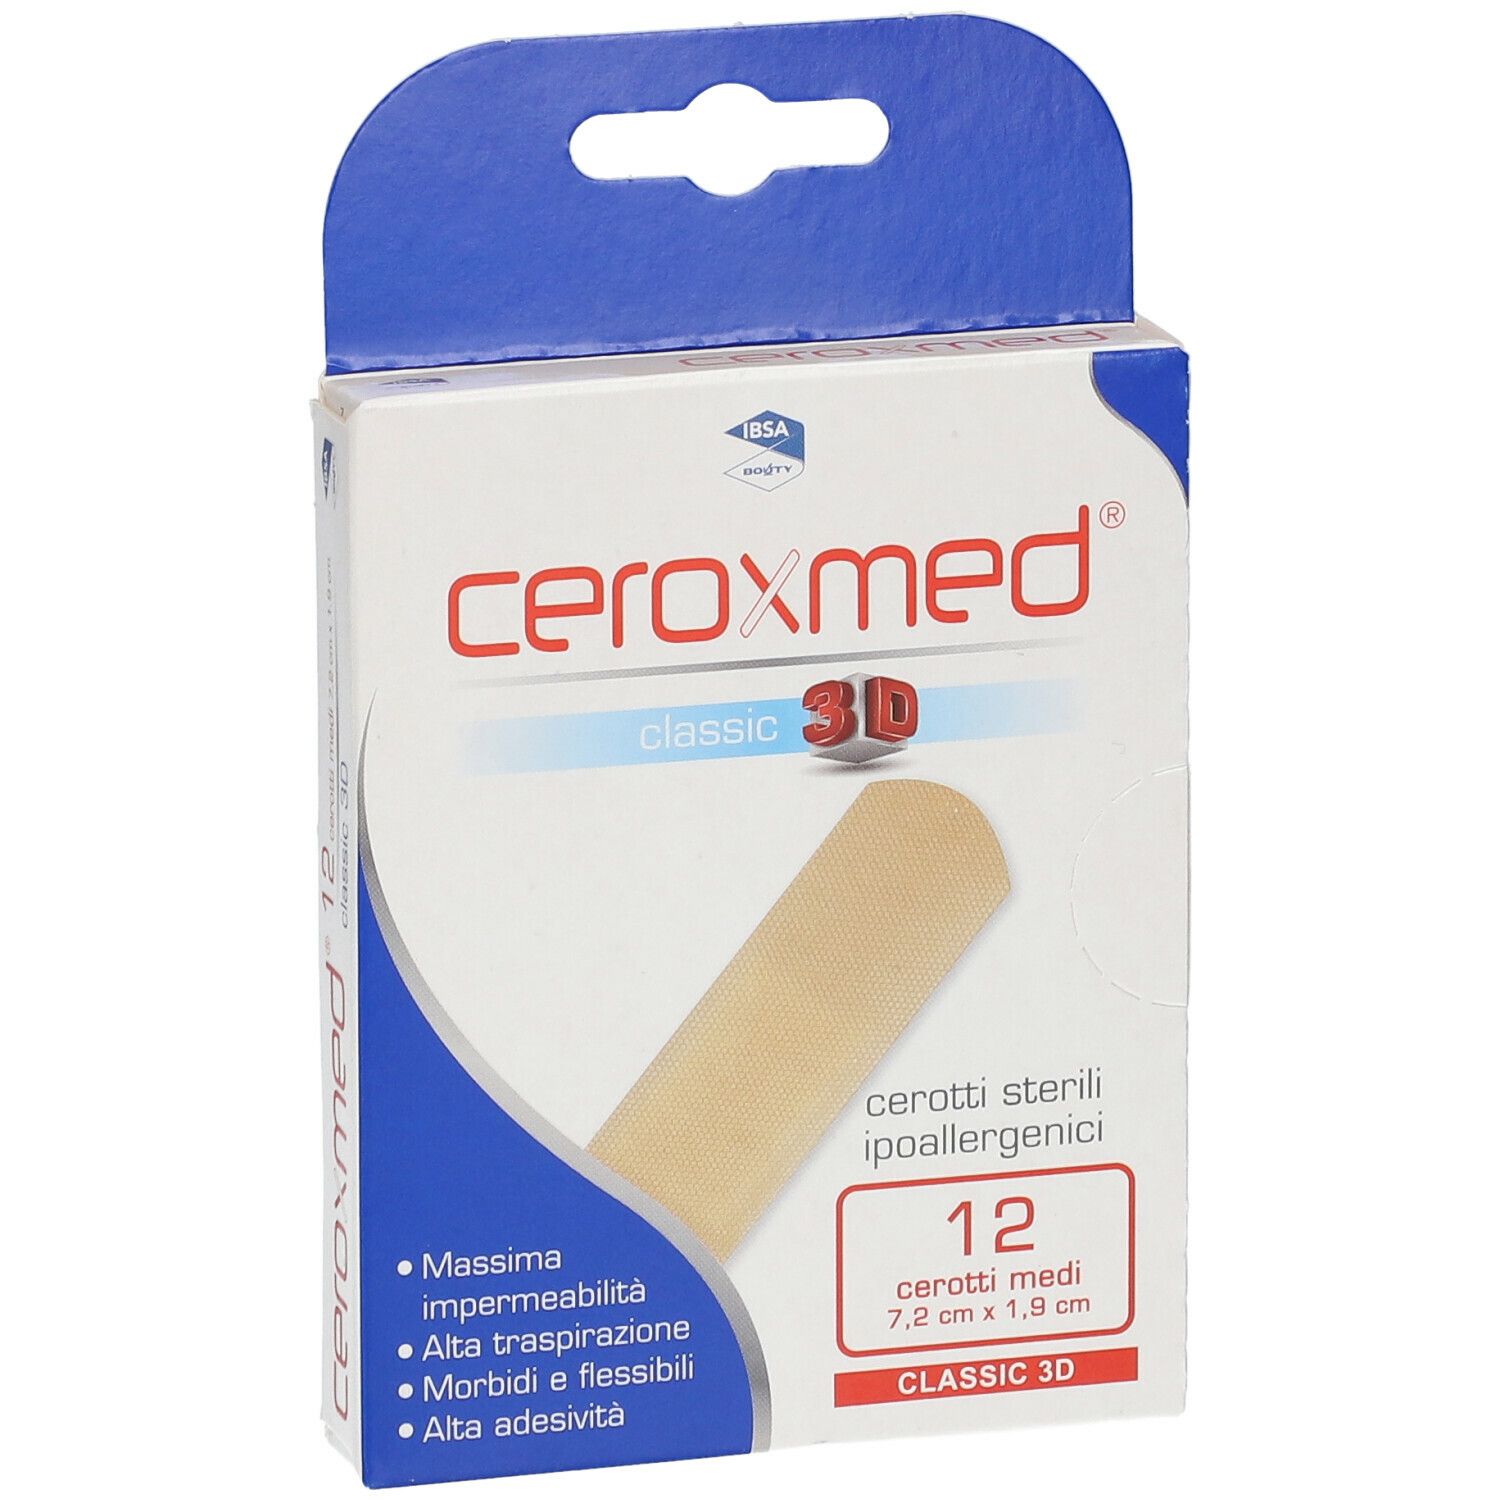 Ceroxmed® Classic 3D 7,2 cm x 1,9 cm